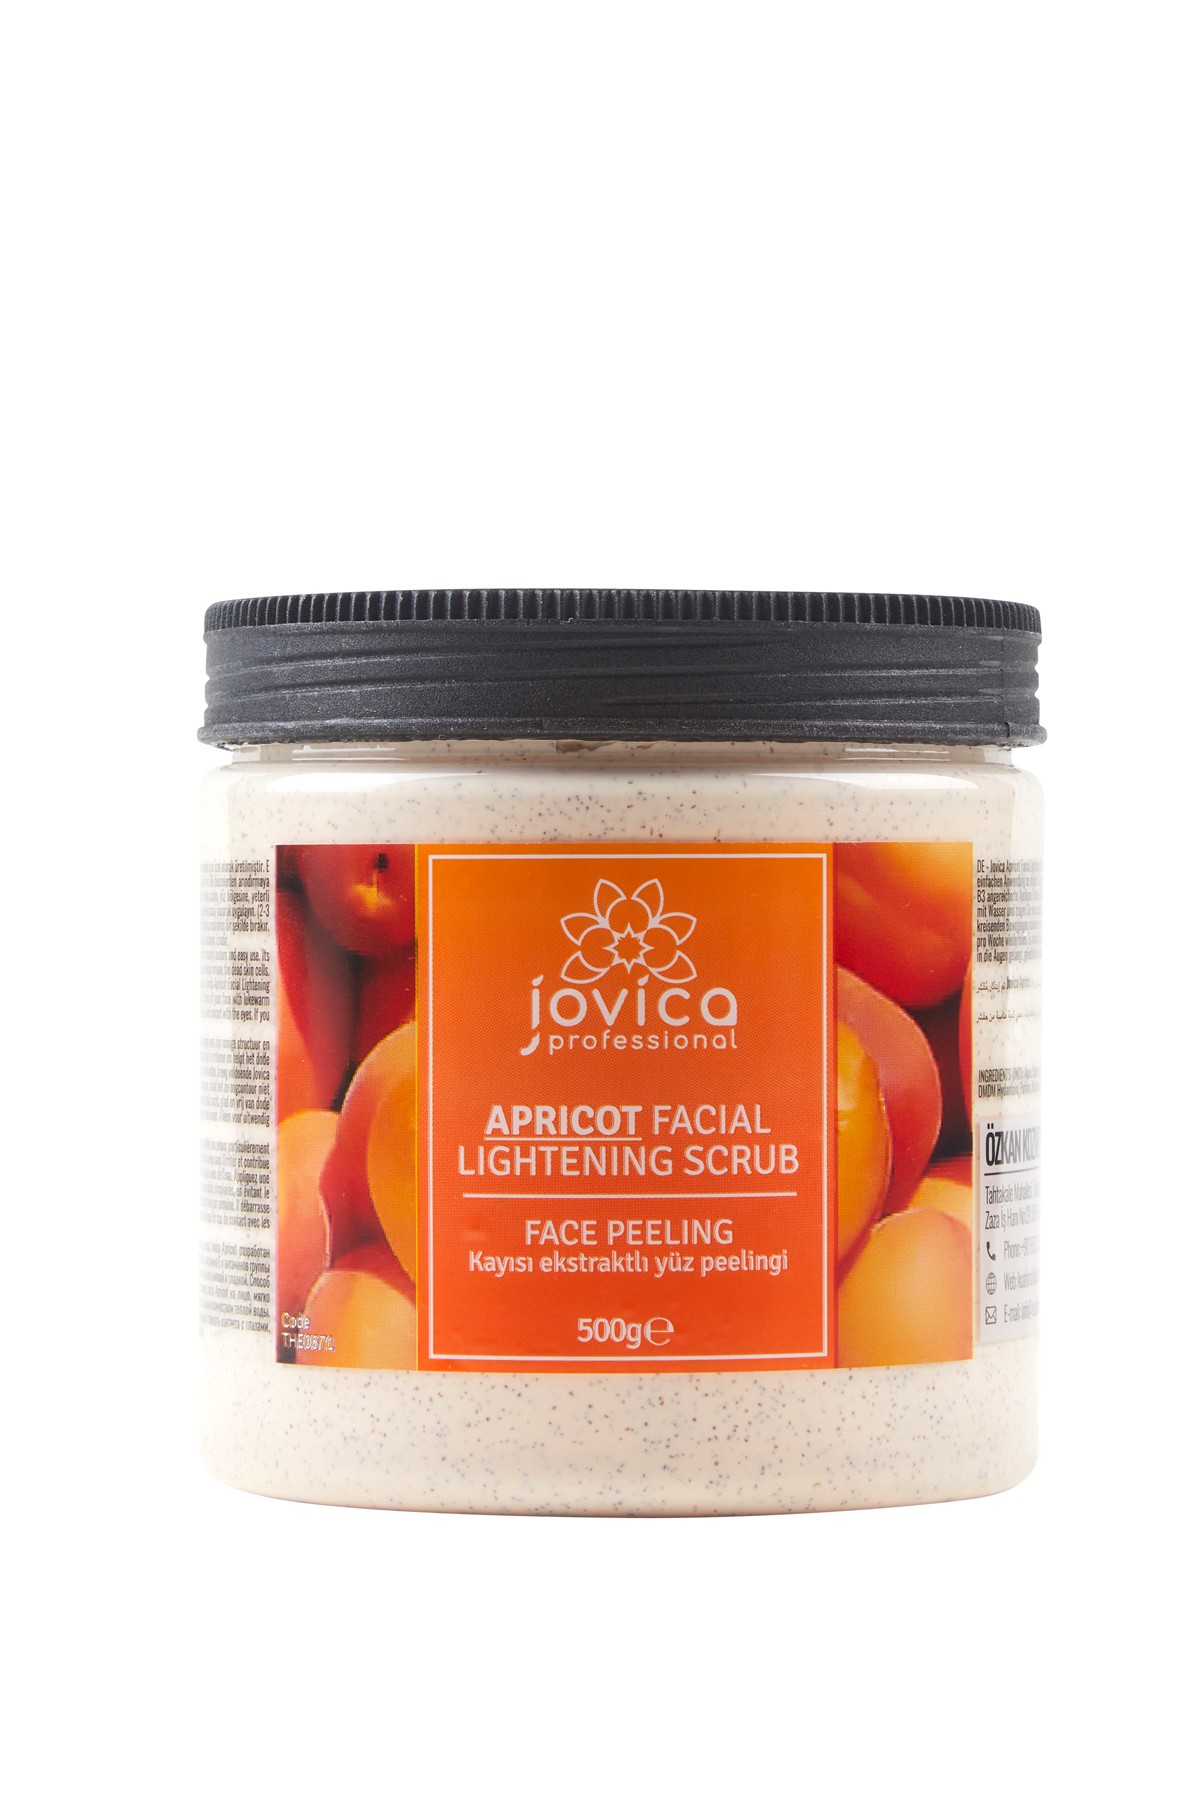 Jovica Apricot Facial Lightening Peeling Gel Scrub 500 ml Kayısı Esktraktlı